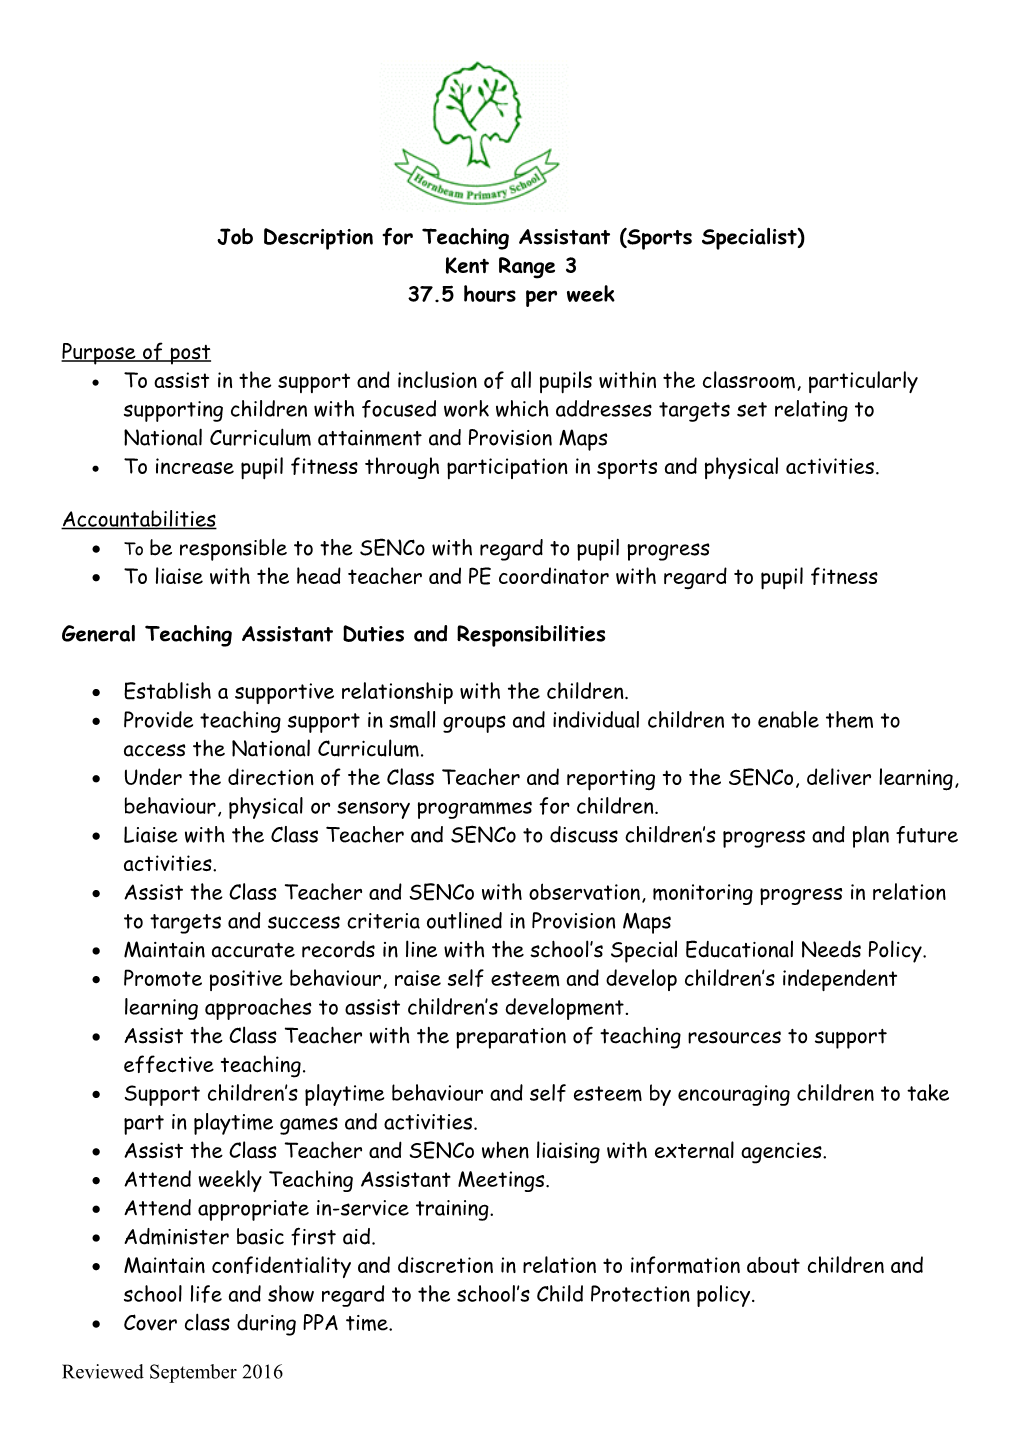 Job Description for Teaching Assistant (Sports Specialist) Kent Range 3 37.5 Hours Per Week